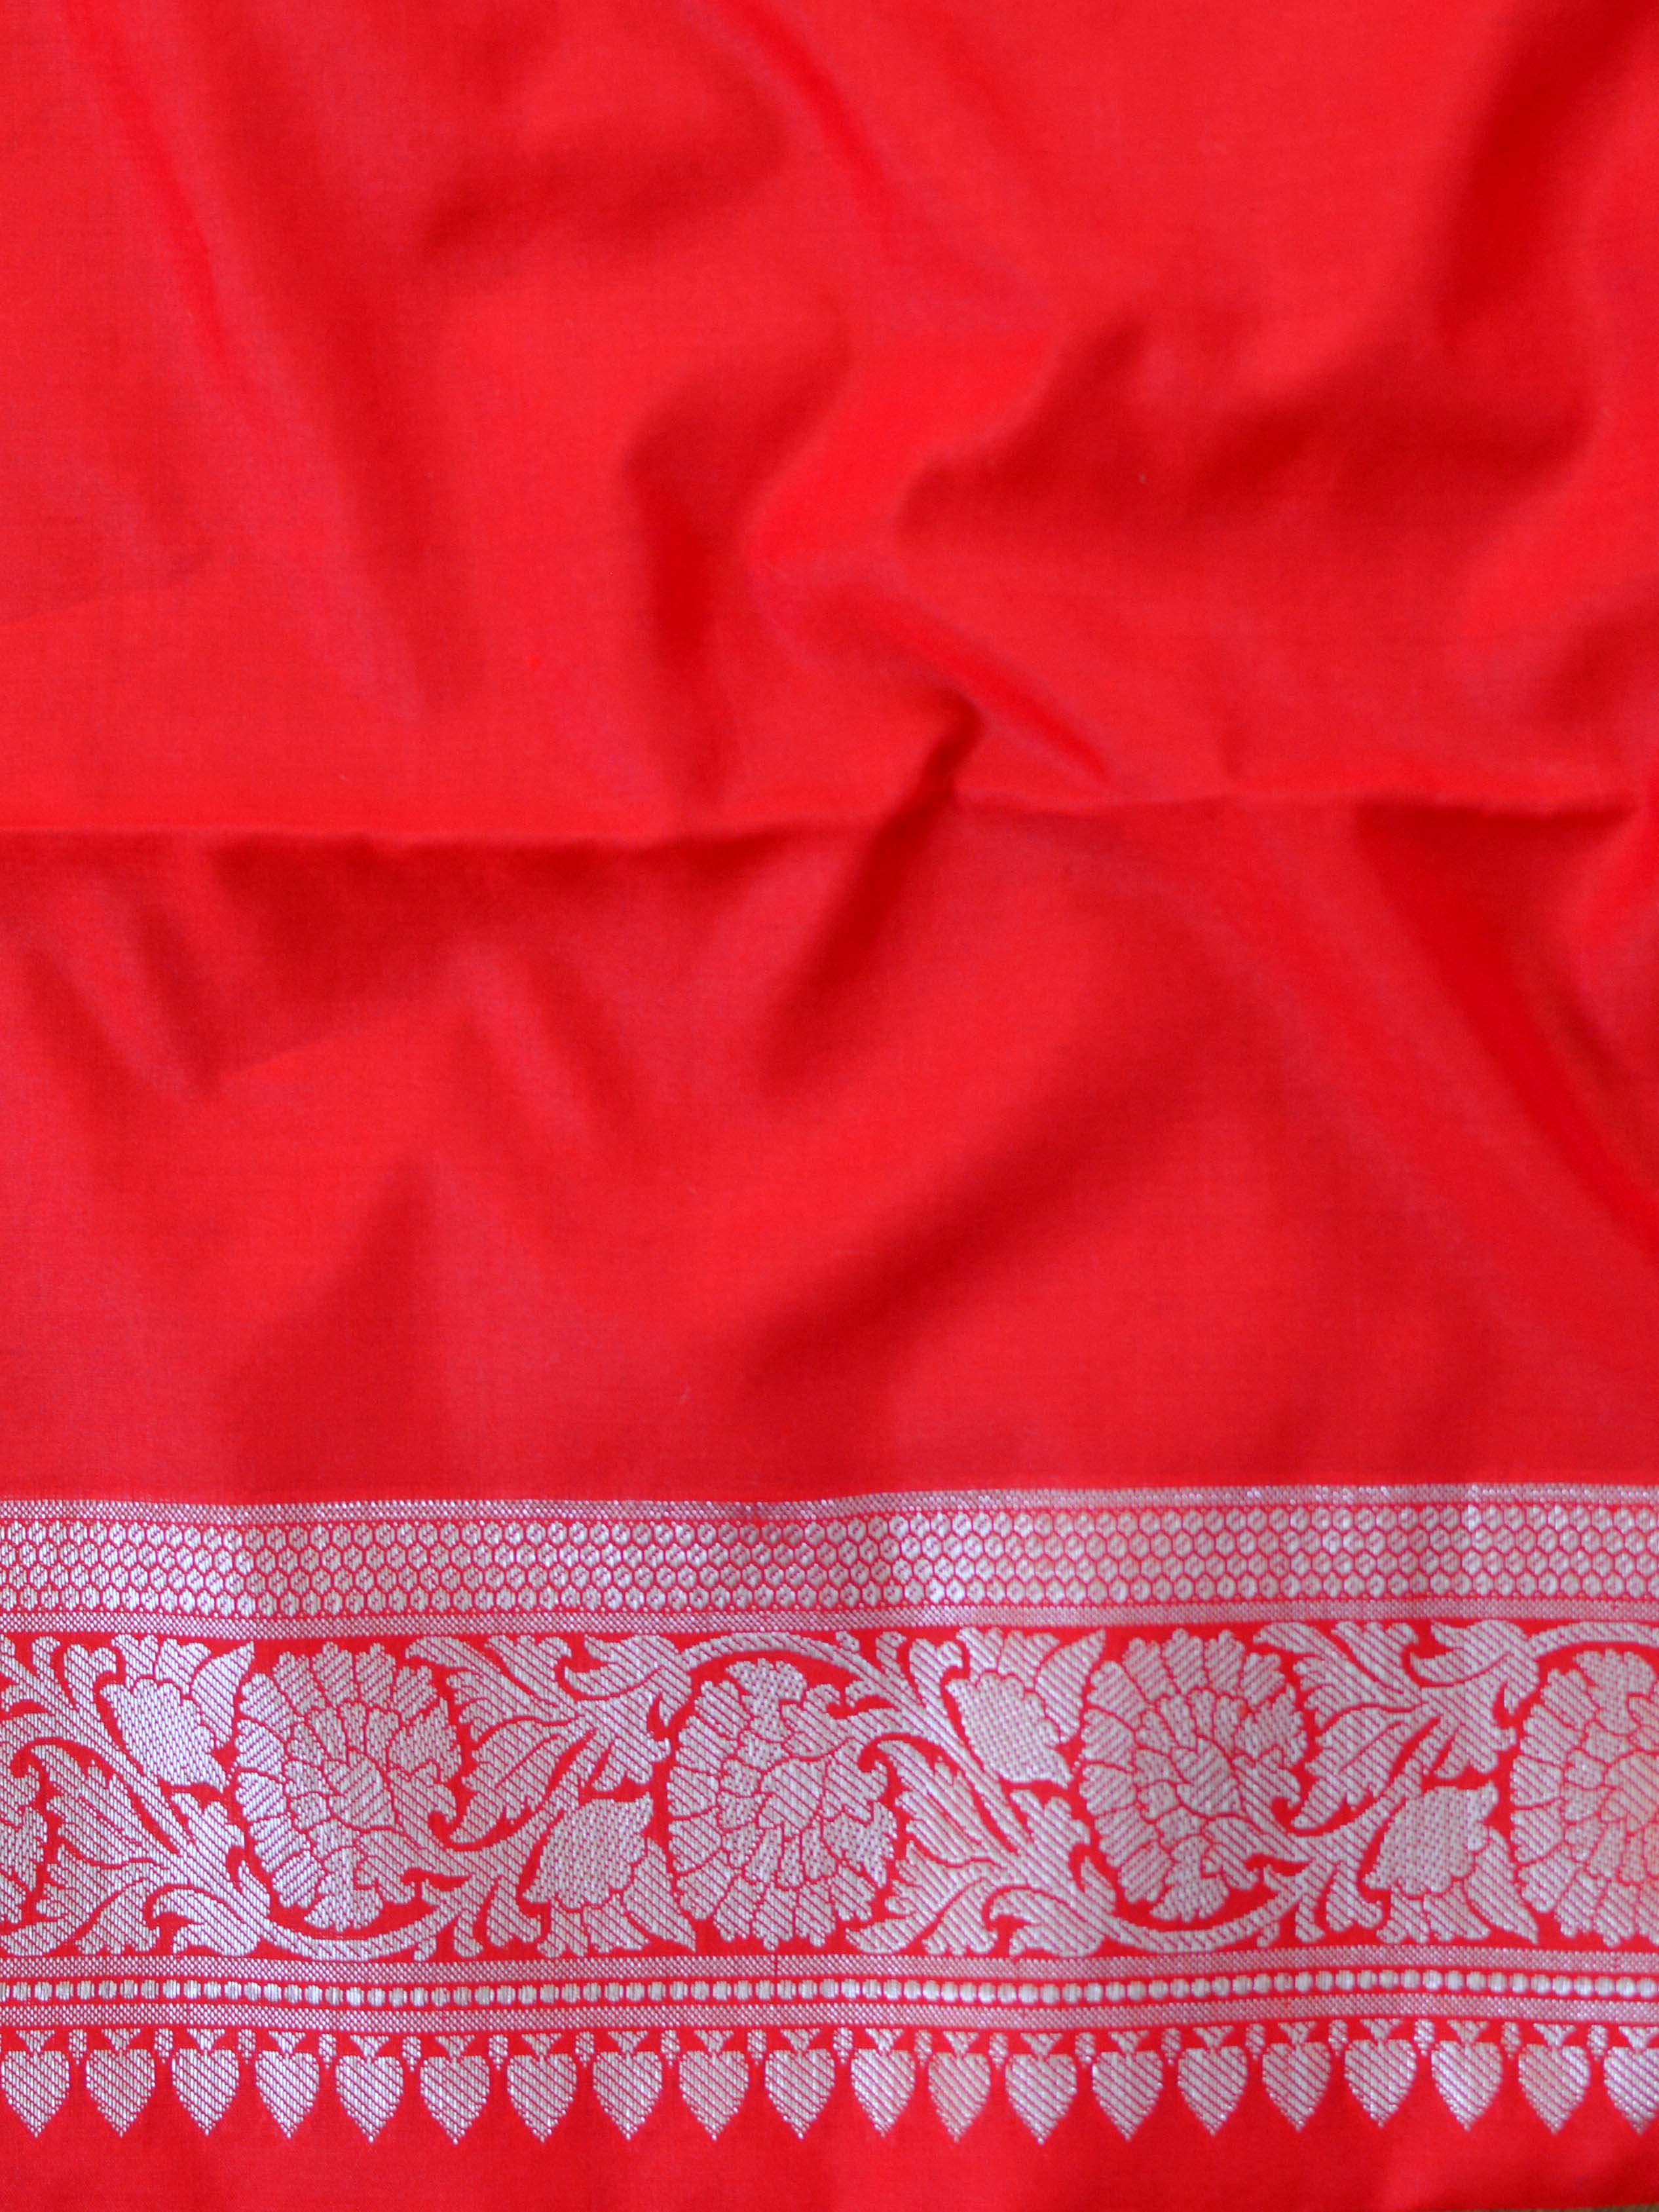 Banarasee Handwoven Semi Silk Saree With Silver Zari Jaal Design-Red